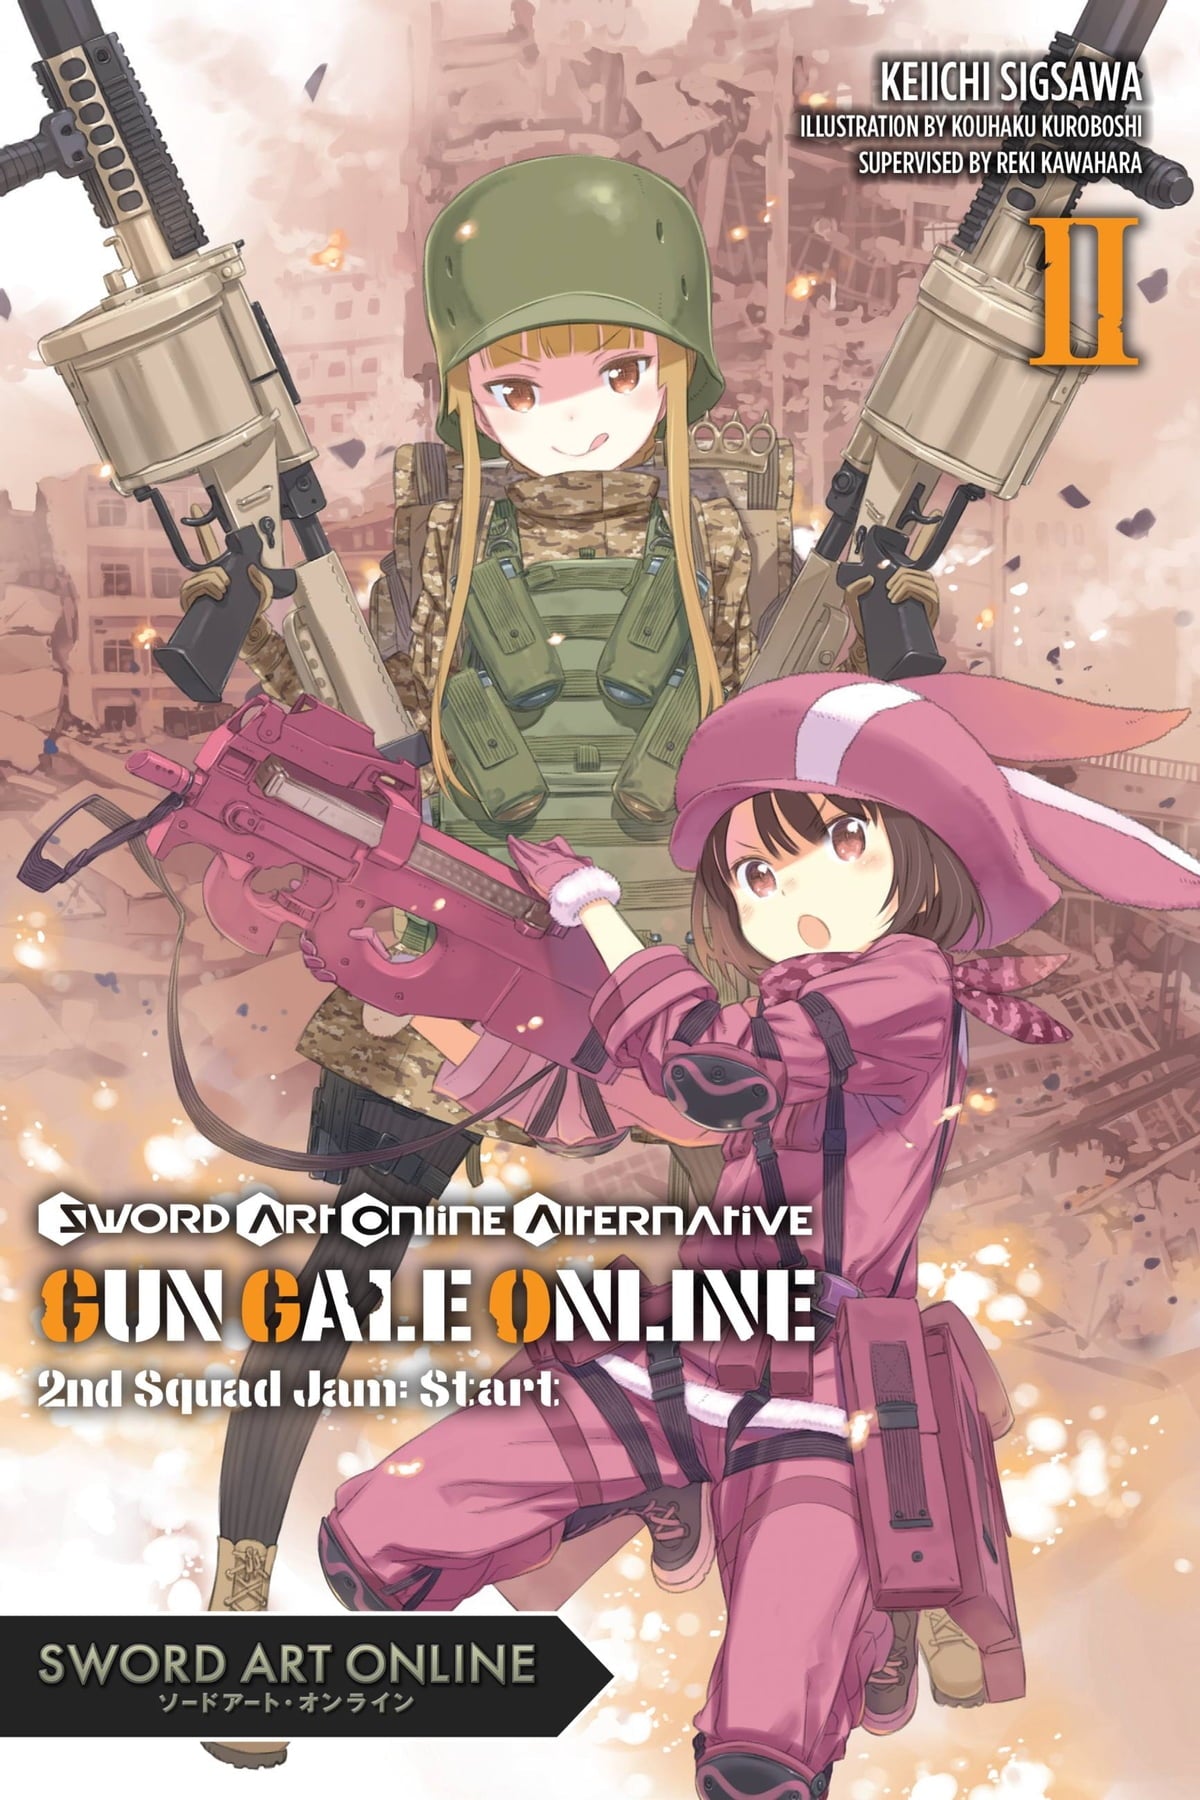 Sword Art Online Alternative Gun Gale Online Vol. 02 (Light Novel): Second Squad Jam: Start